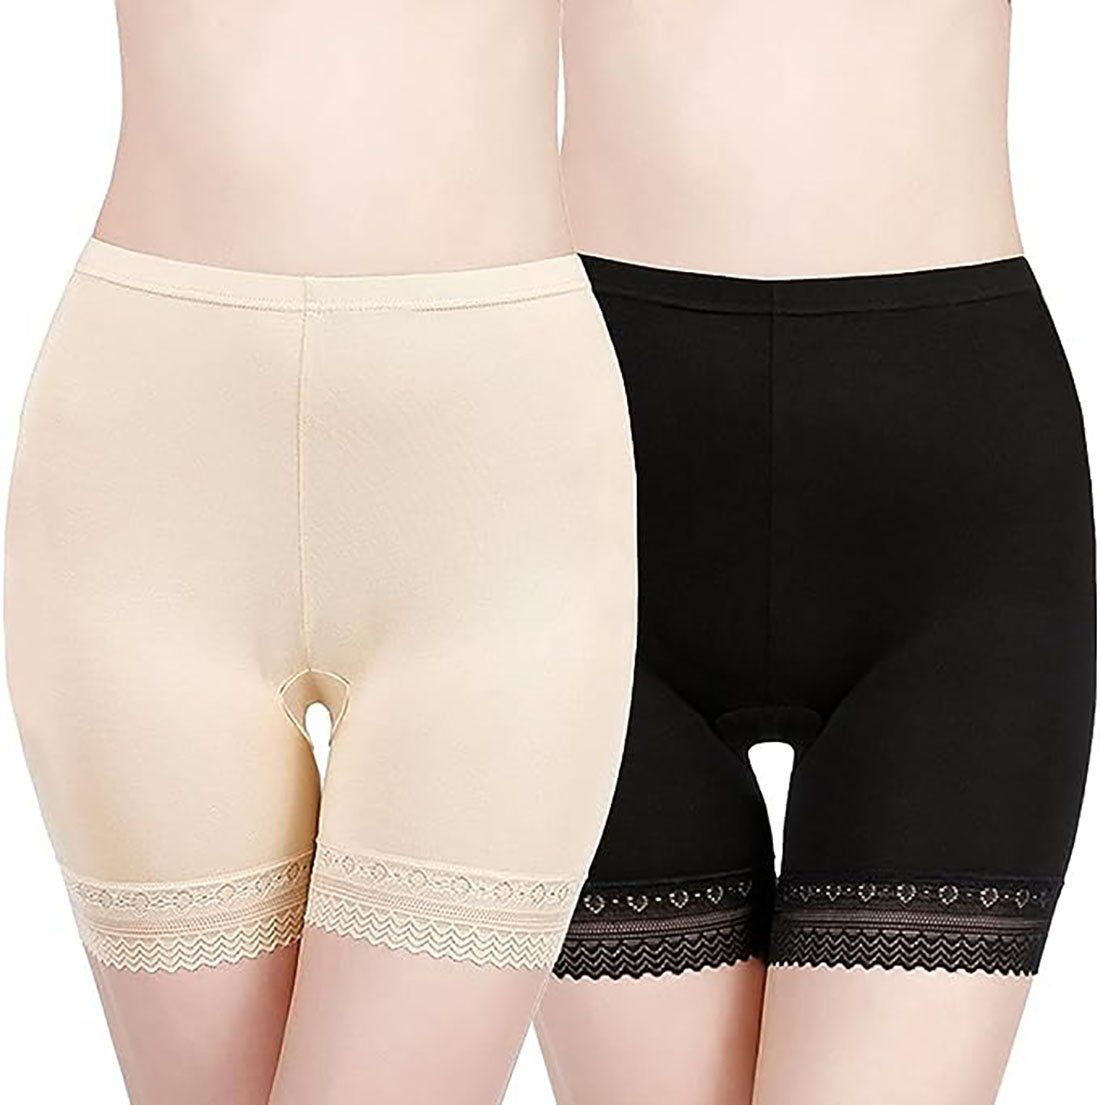 CTGtree Yogashorts 2 Stück Damen Slipshorts Mädchen Panties Unterhosen Baumwolle